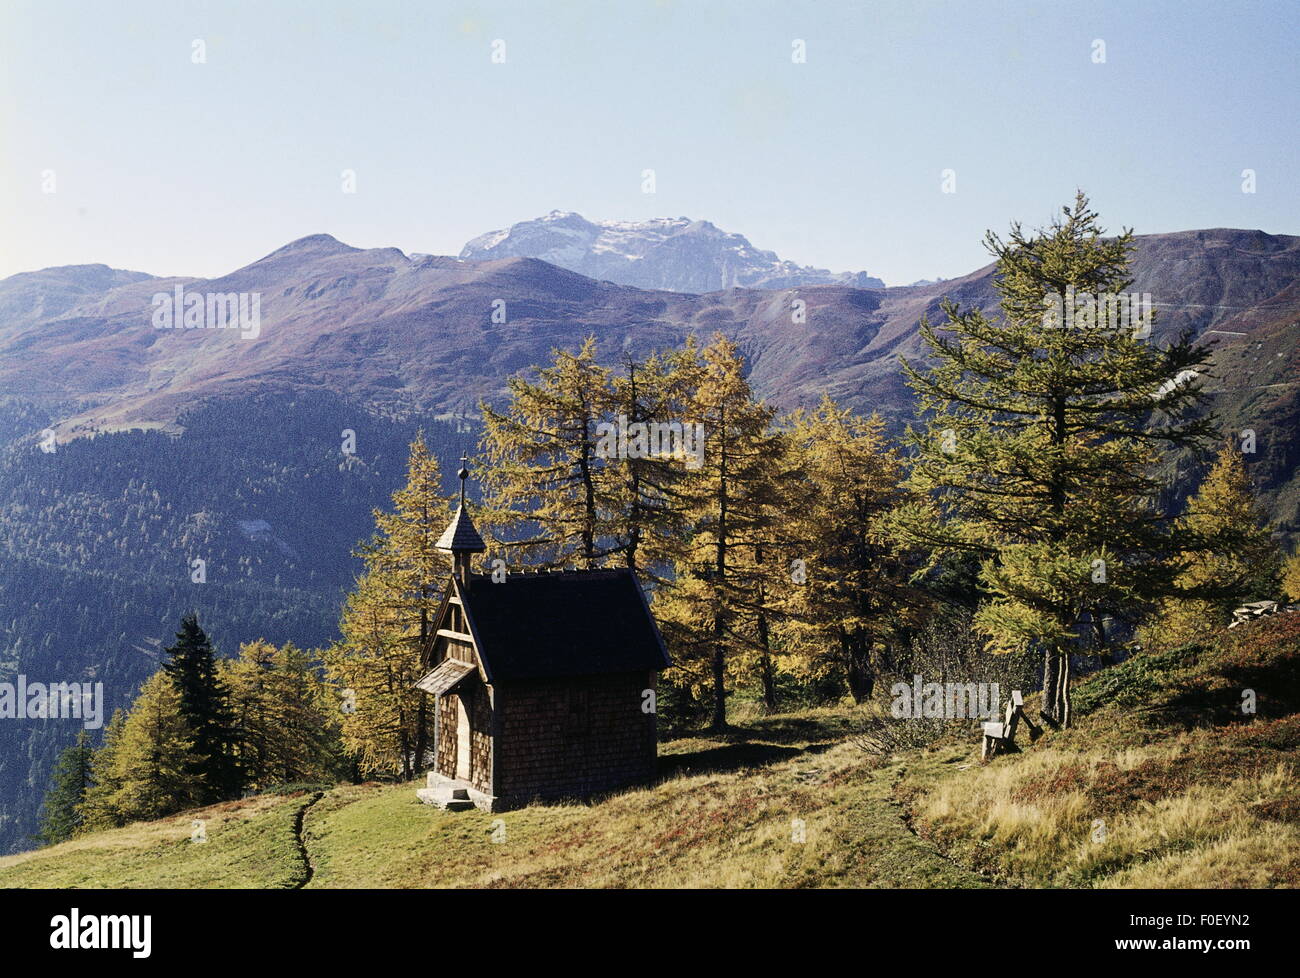 Geographie / Reisen, Italien, Landschaften, Bergkapelle bei Zirog, Südtirol, 1970, Zusatz-Rechte-Clearences-nicht vorhanden Stockfoto